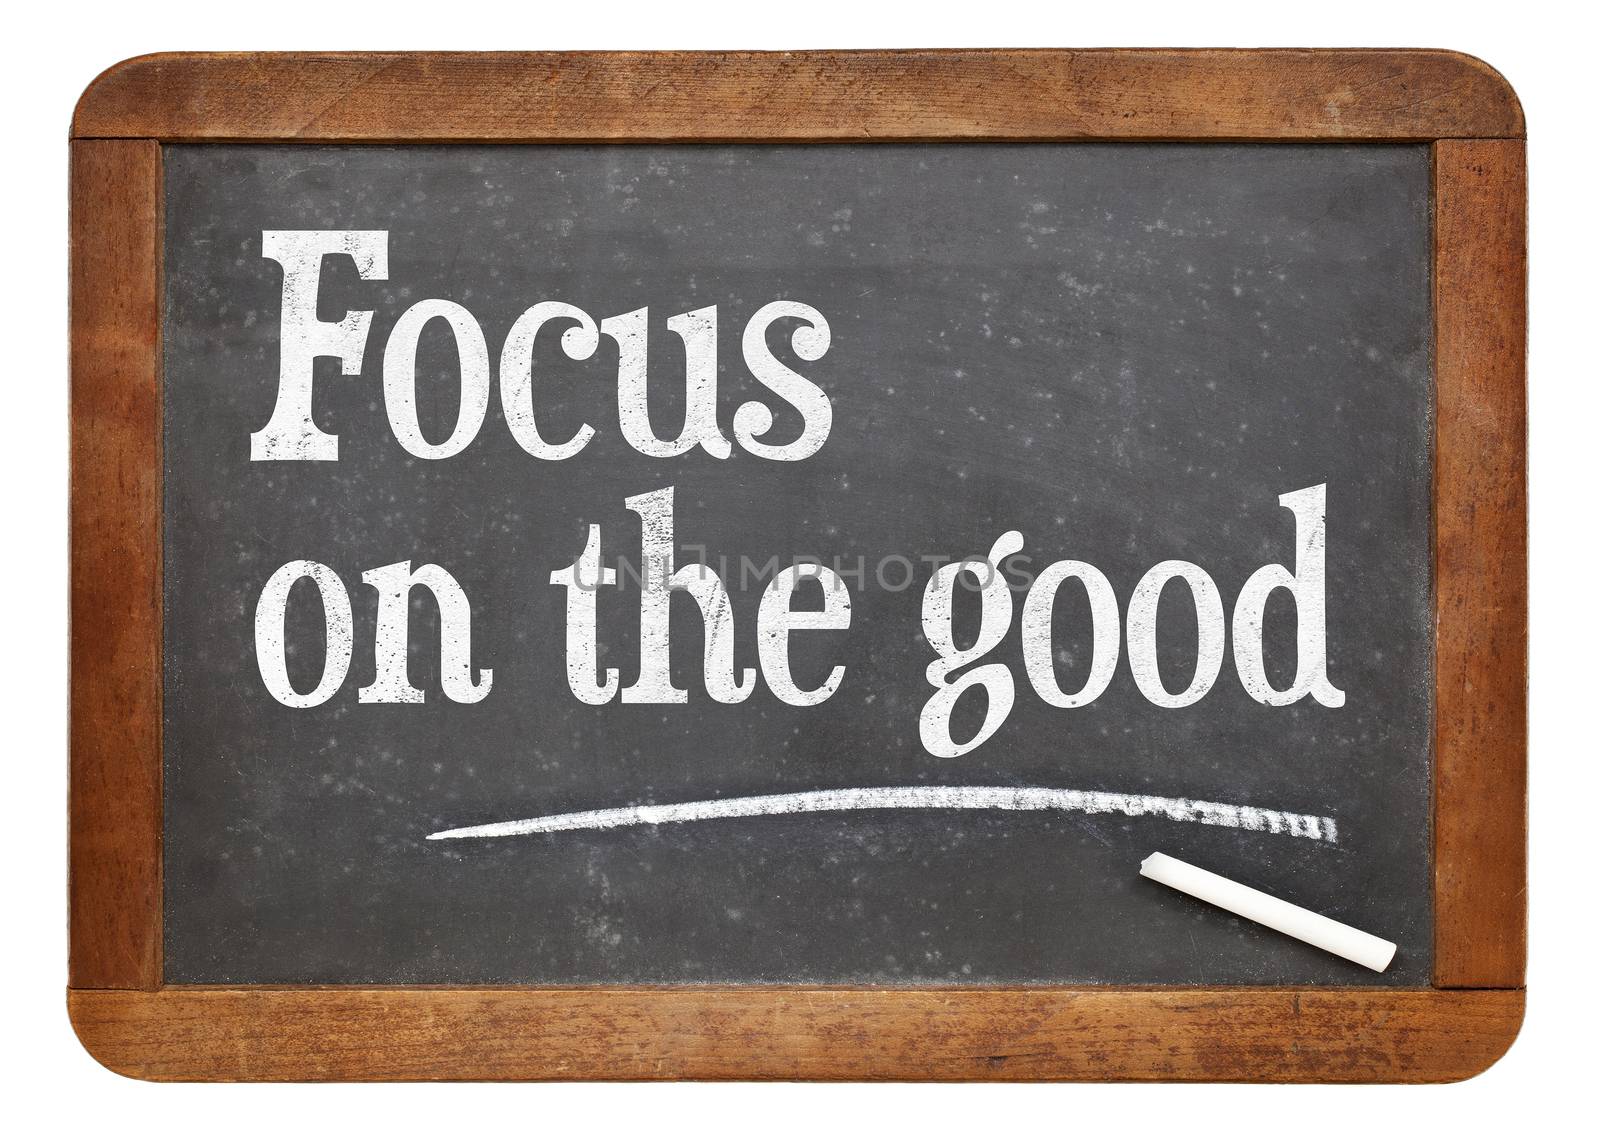 Focus on the good - positivity concept - text on a vintage slate blackboard